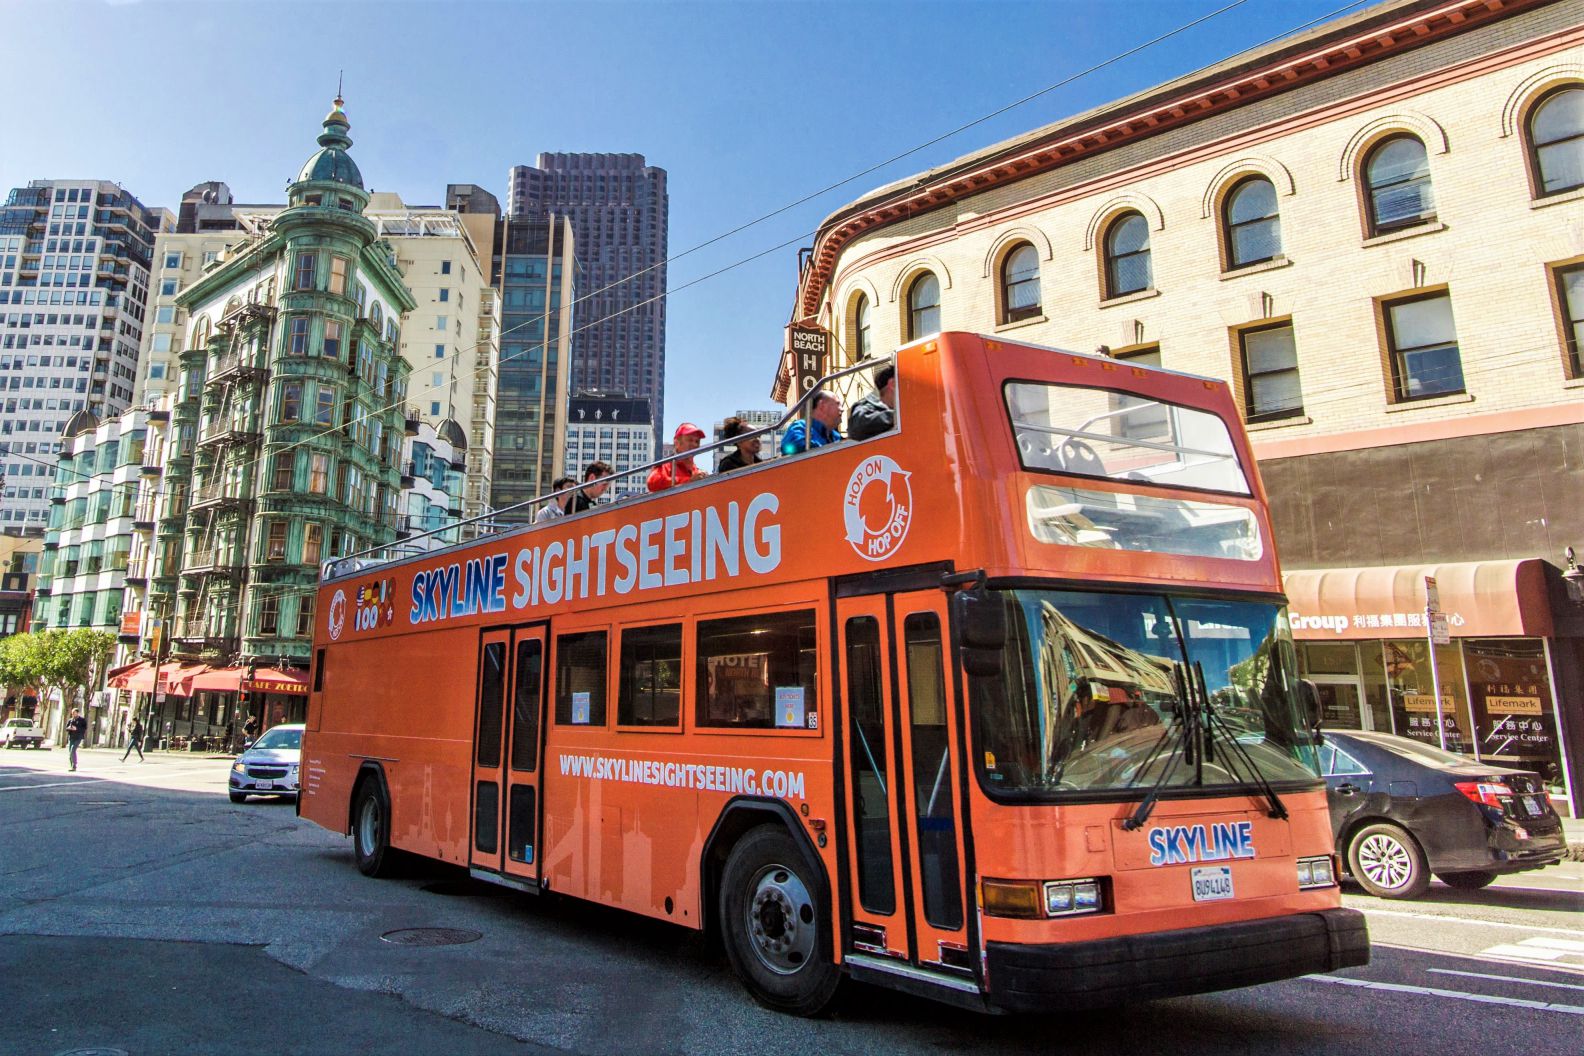 [SALE] San Francisco Skyline Sightseeing HopOn HopOff Bus Tour with